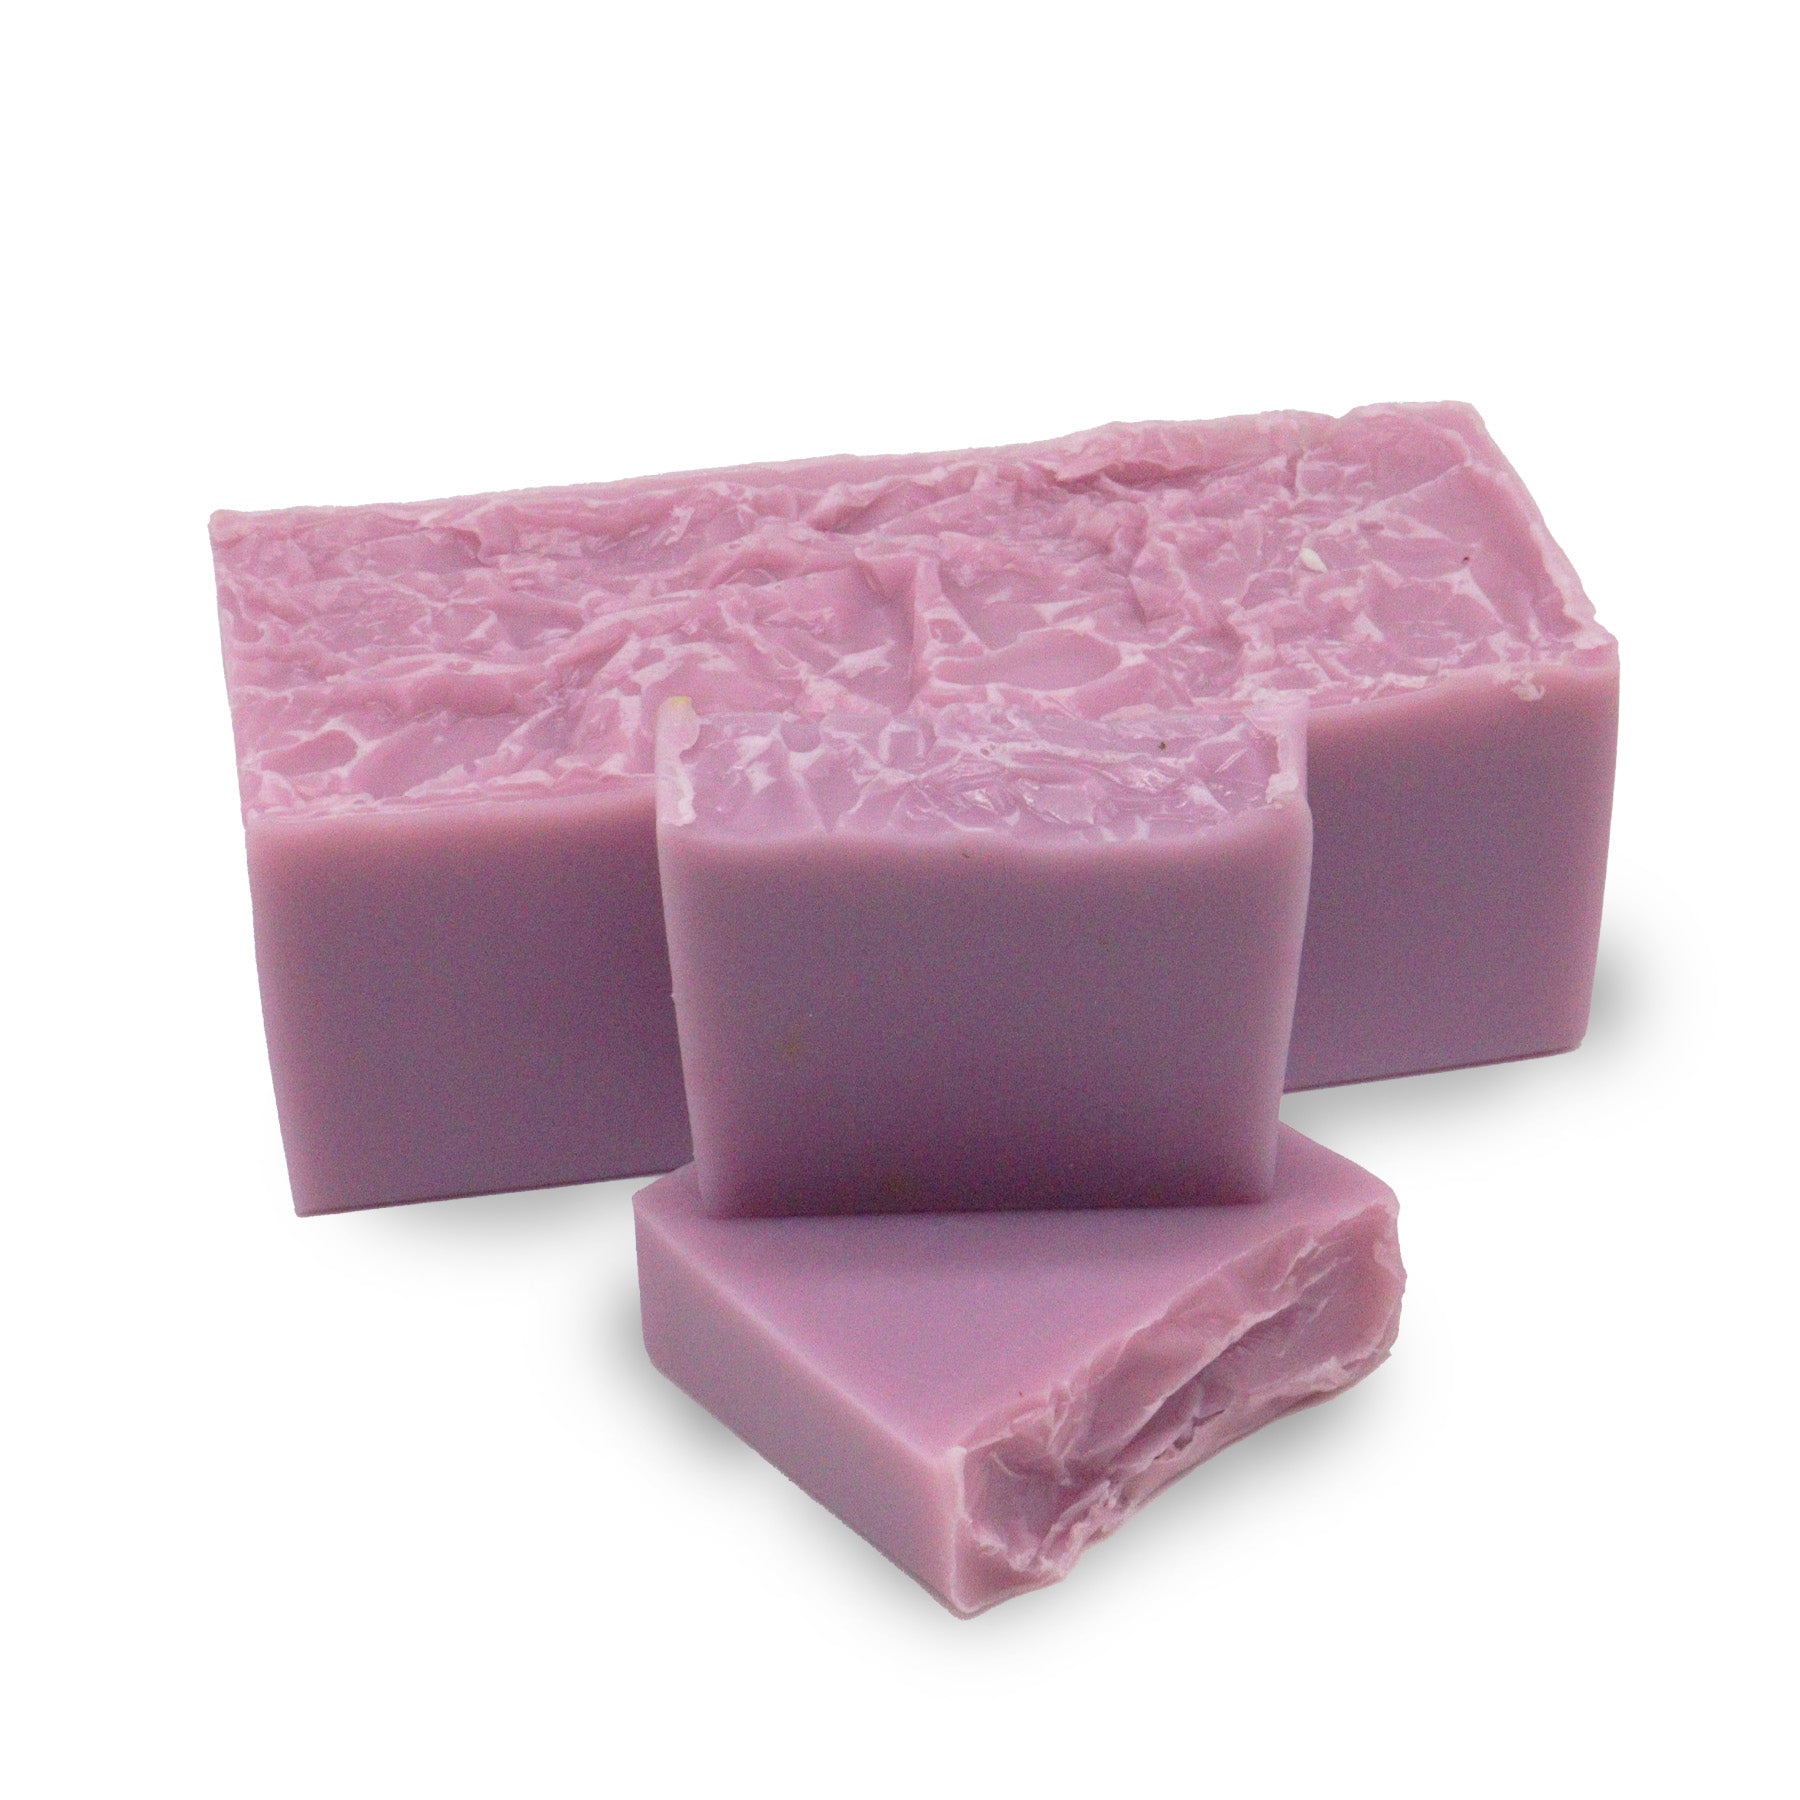 Lavender Serenity - Artisan Handcrafted Soap - Slice or Loaf - Cosmic Serenity Shop